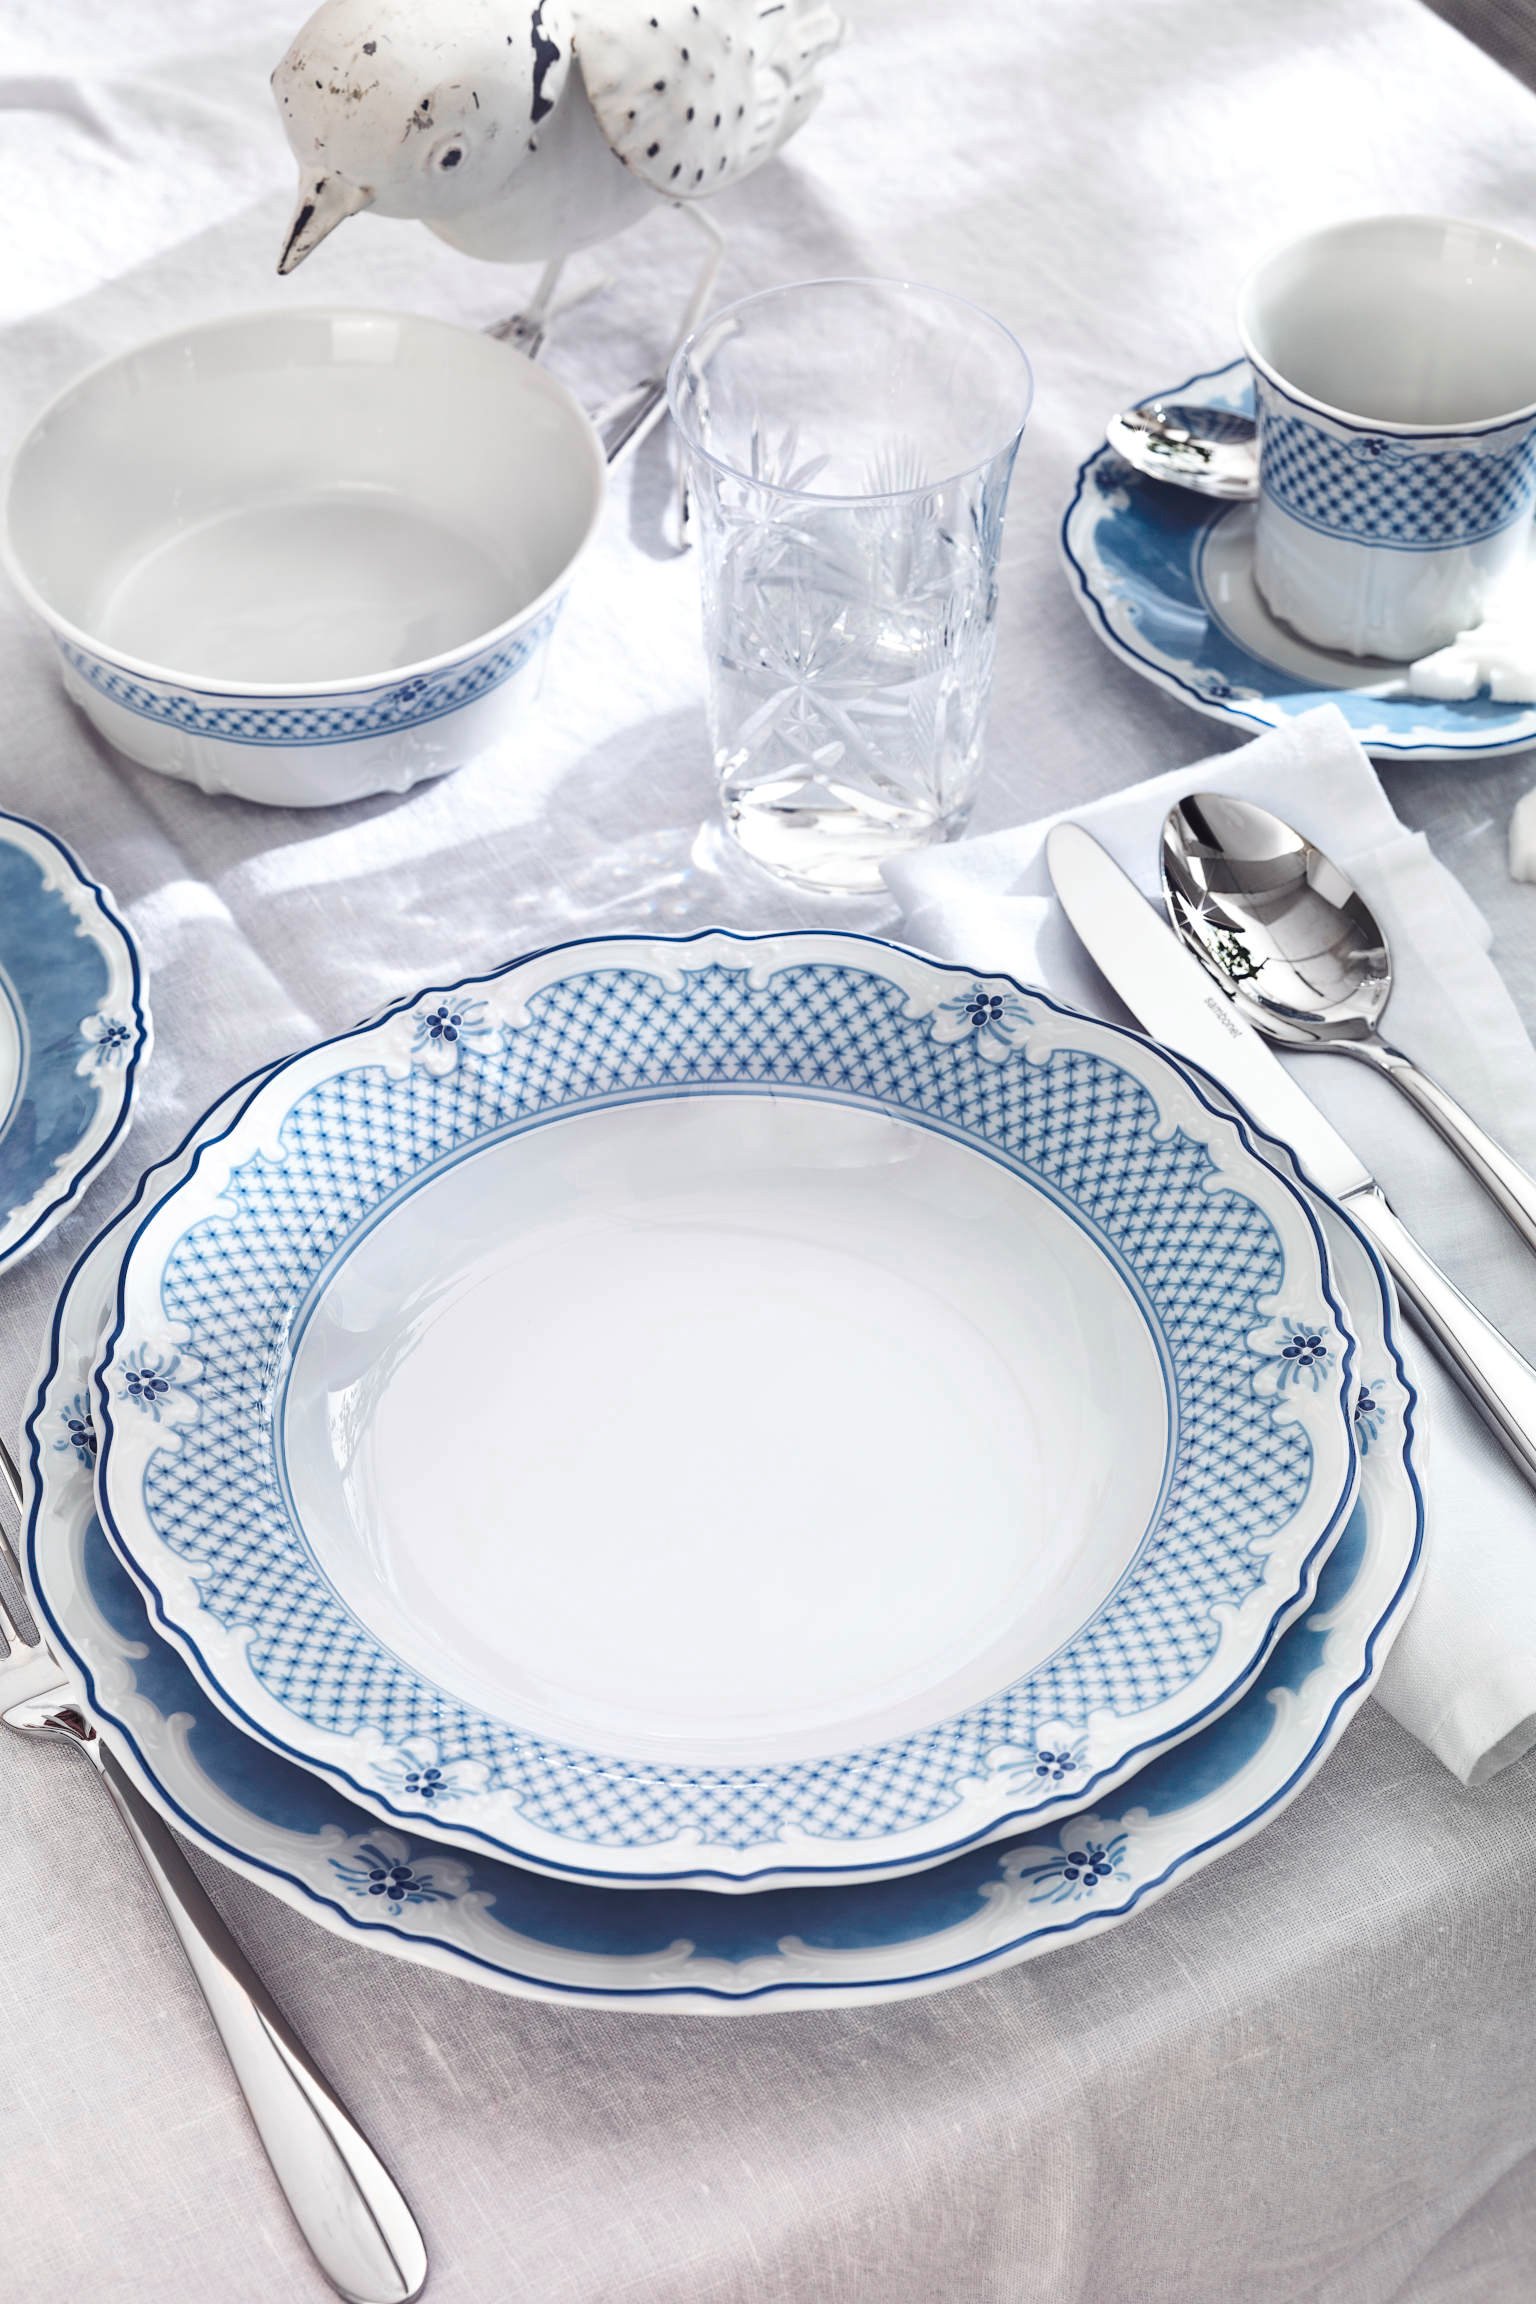 Hutschenreuther Baronesse Estelle plates arranged on linen tablecloth